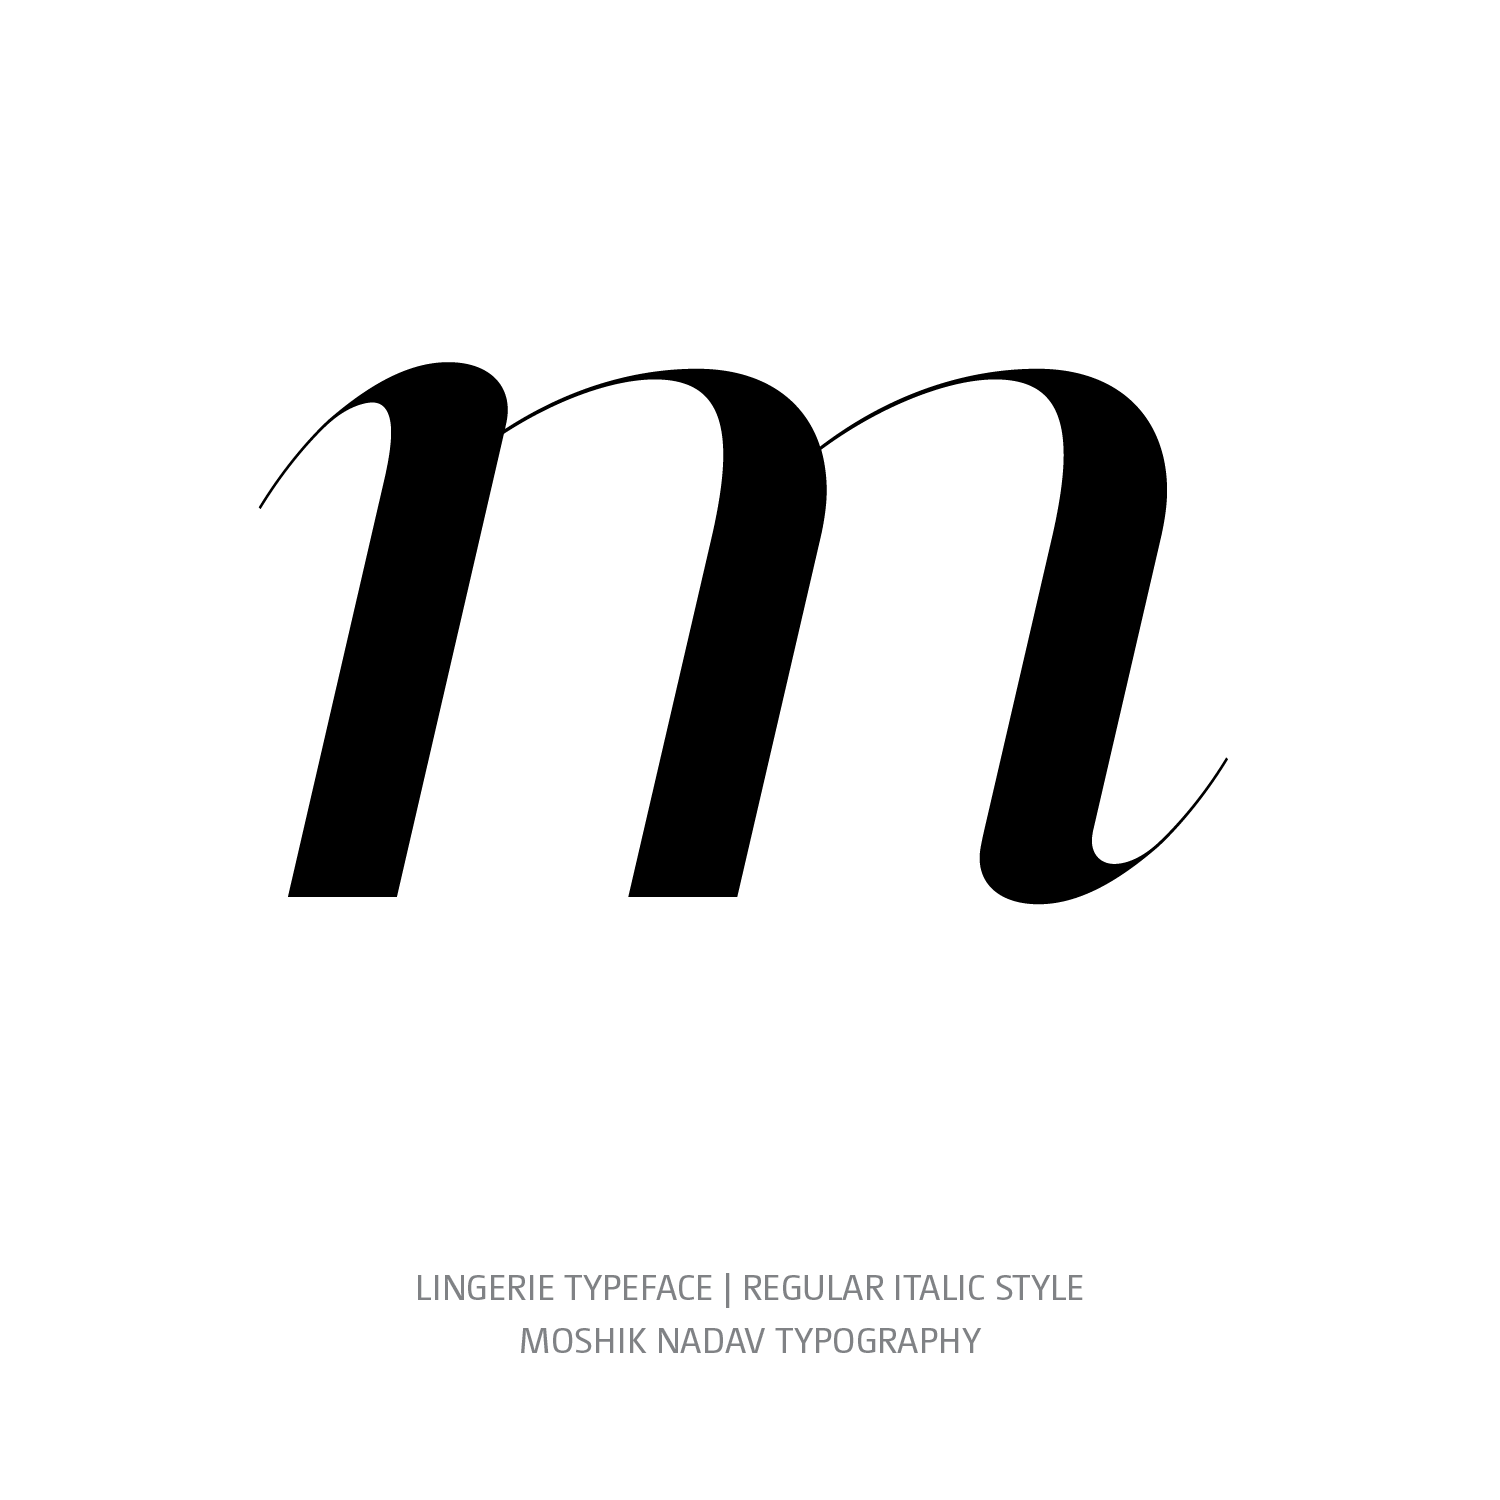 Lingerie Typeface Regular Italic m - Fashion fonts by Moshik Nadav Typography